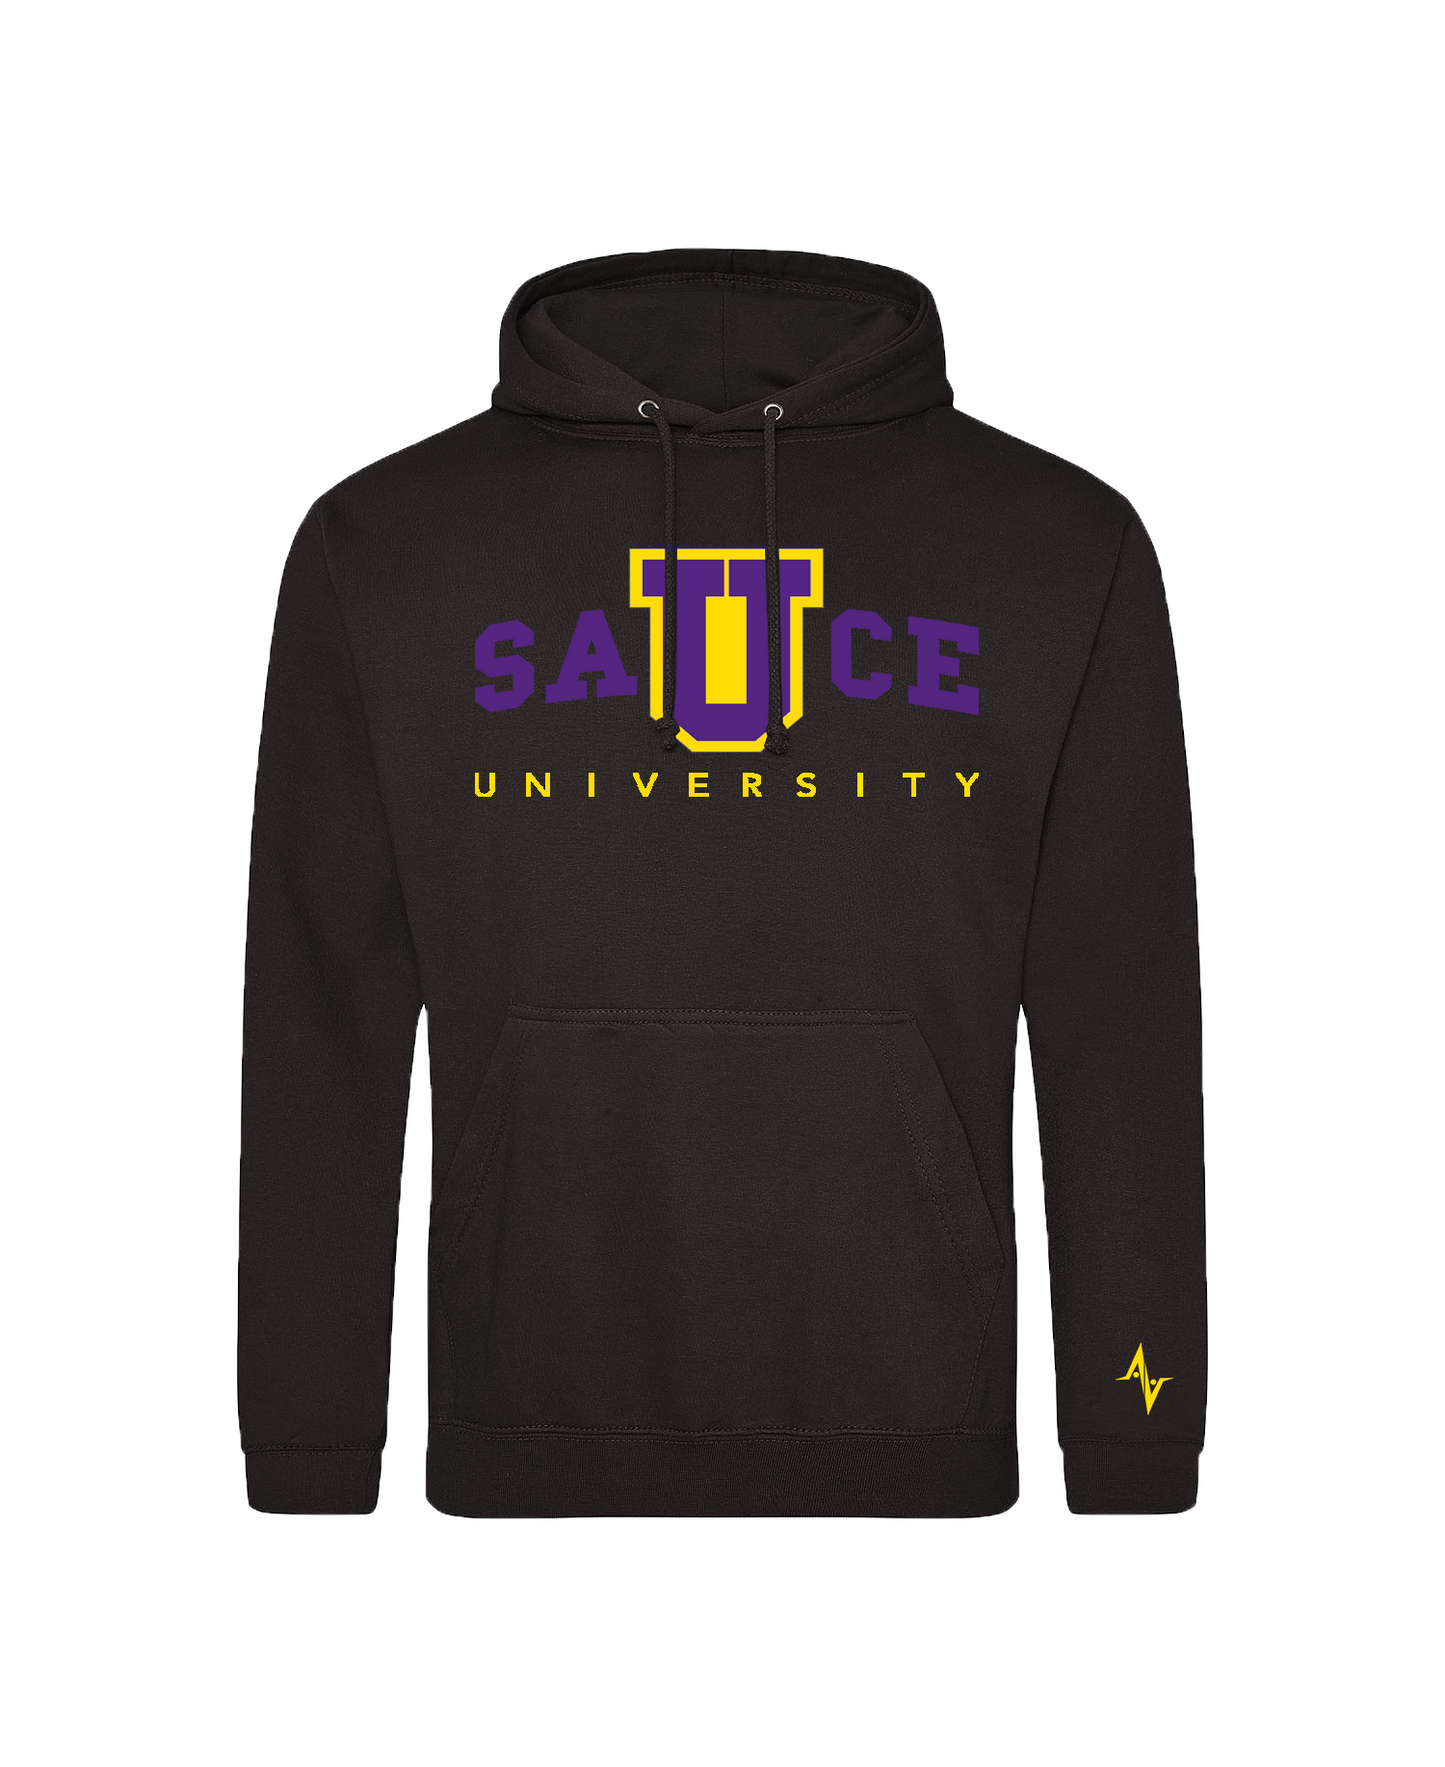 Sauce University Black Mamba Tribute